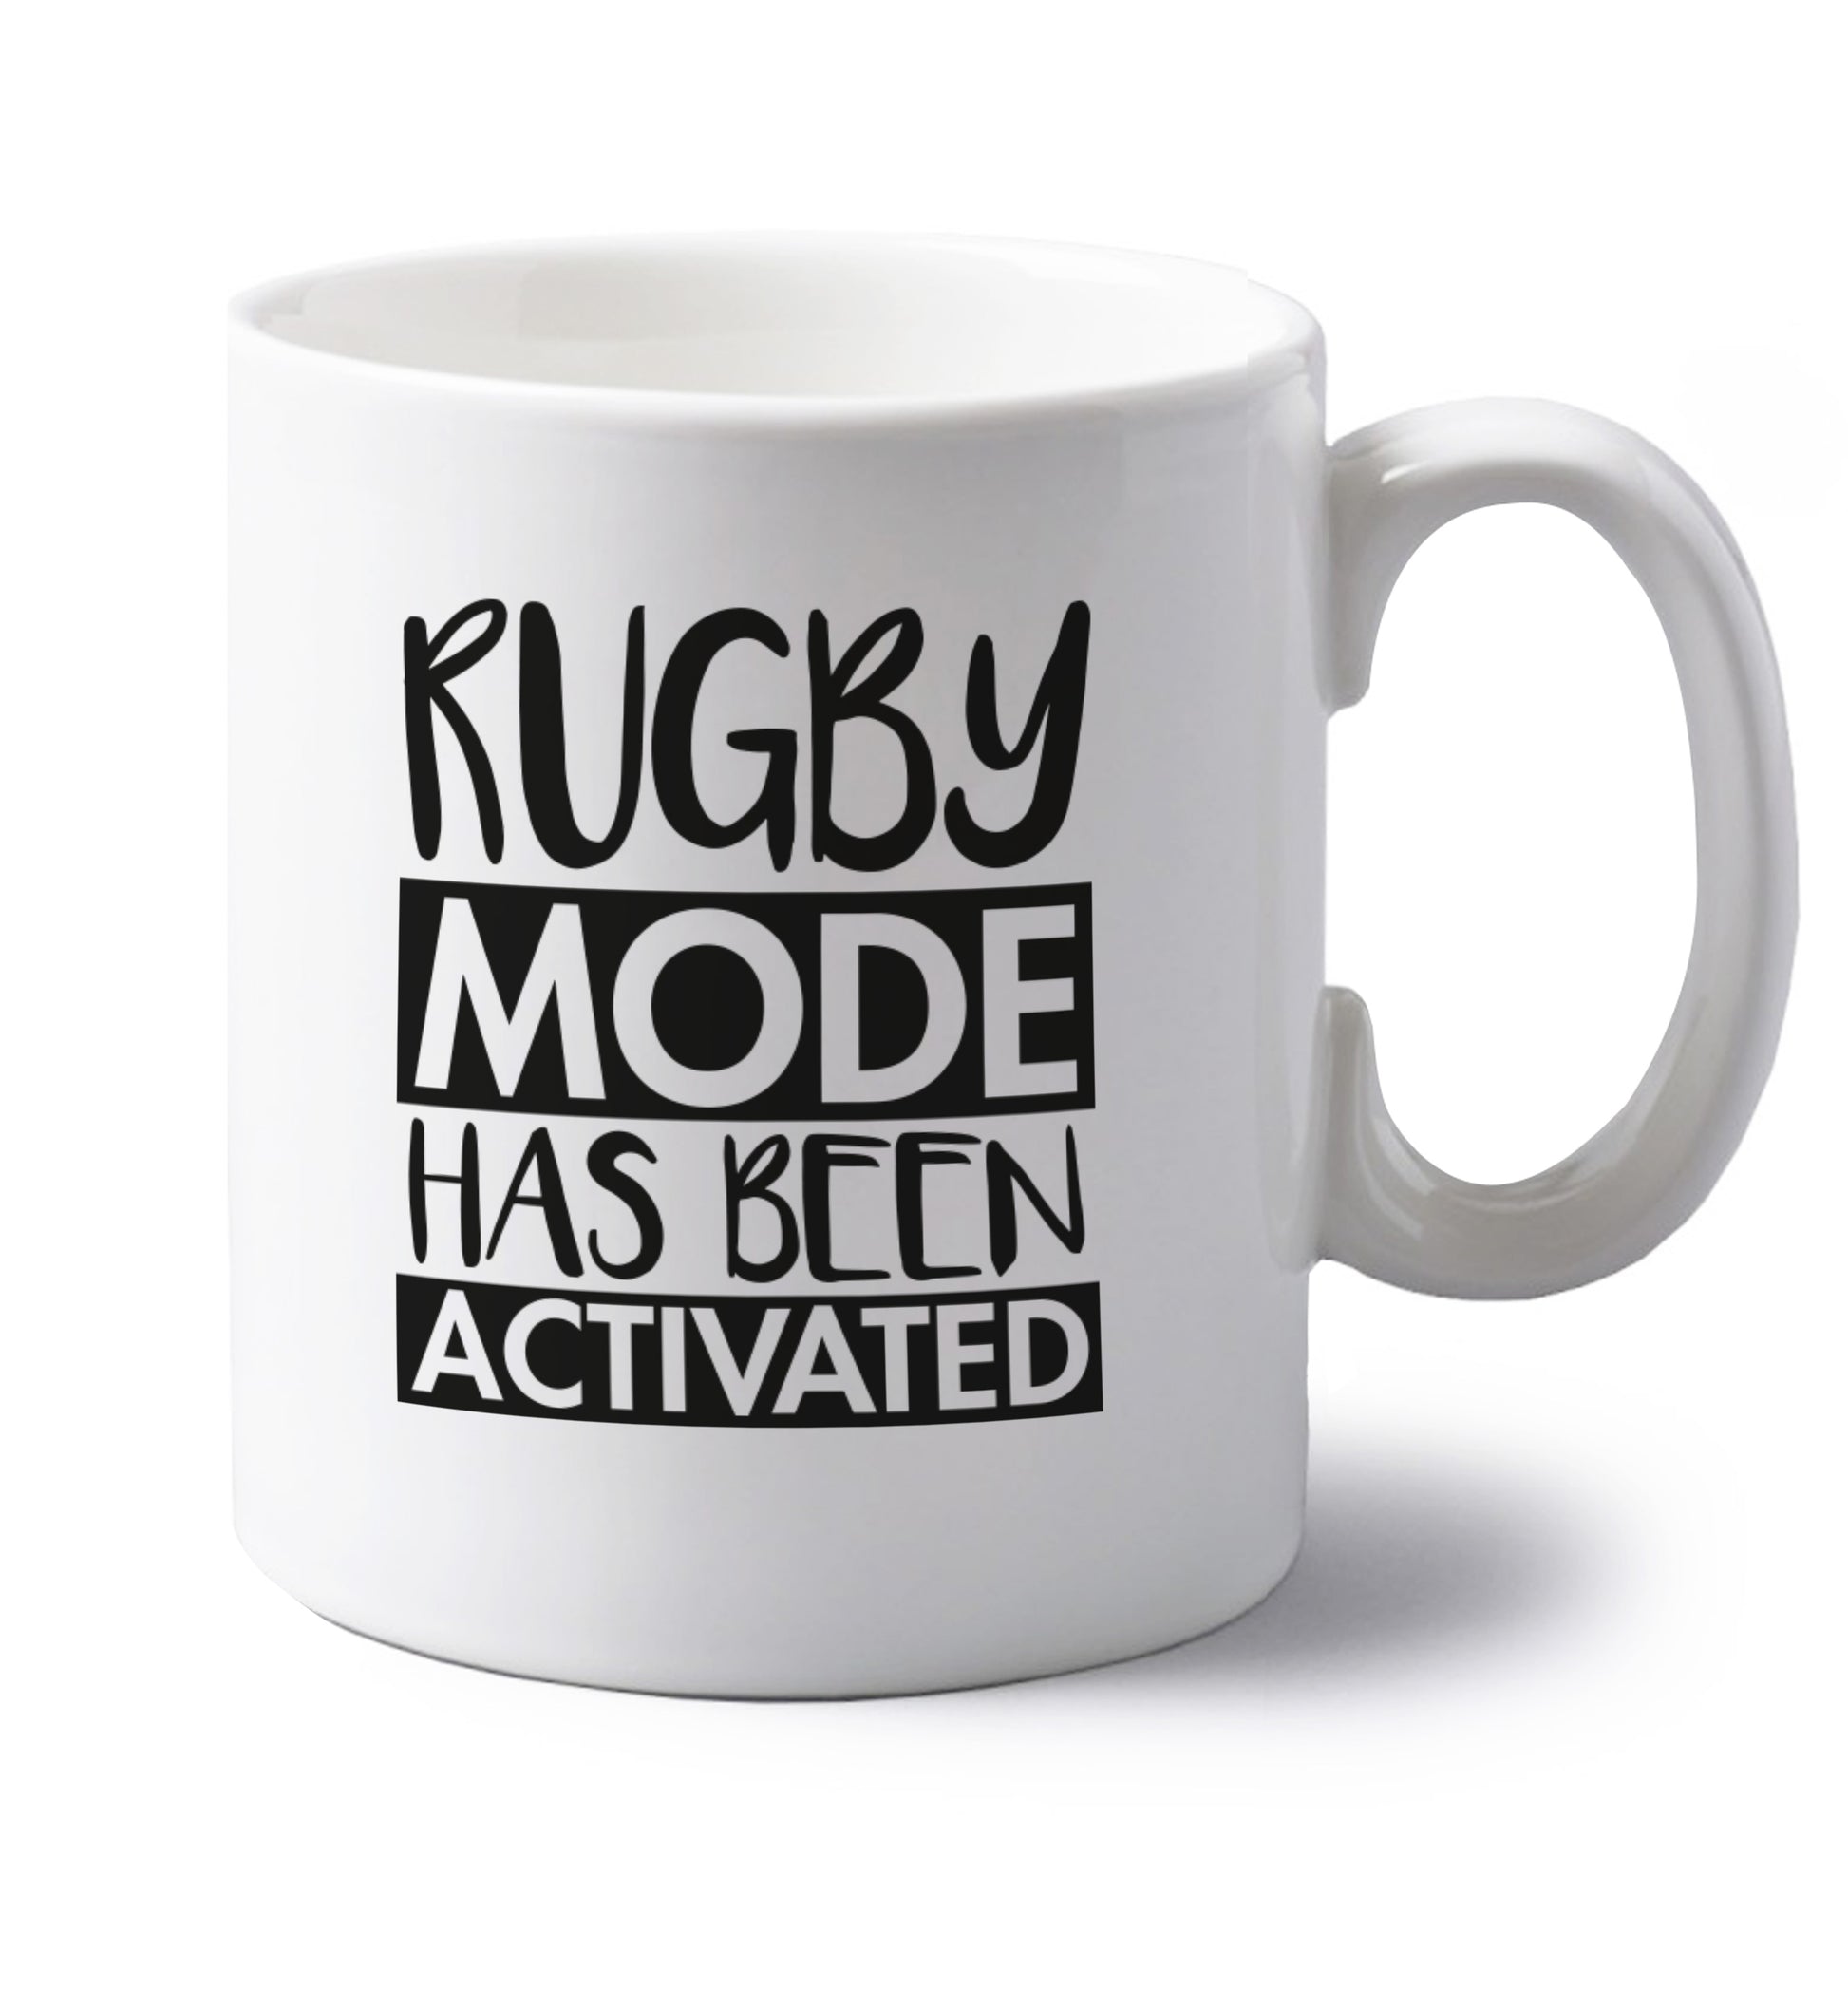 Rugby mode activated left handed white ceramic mug 